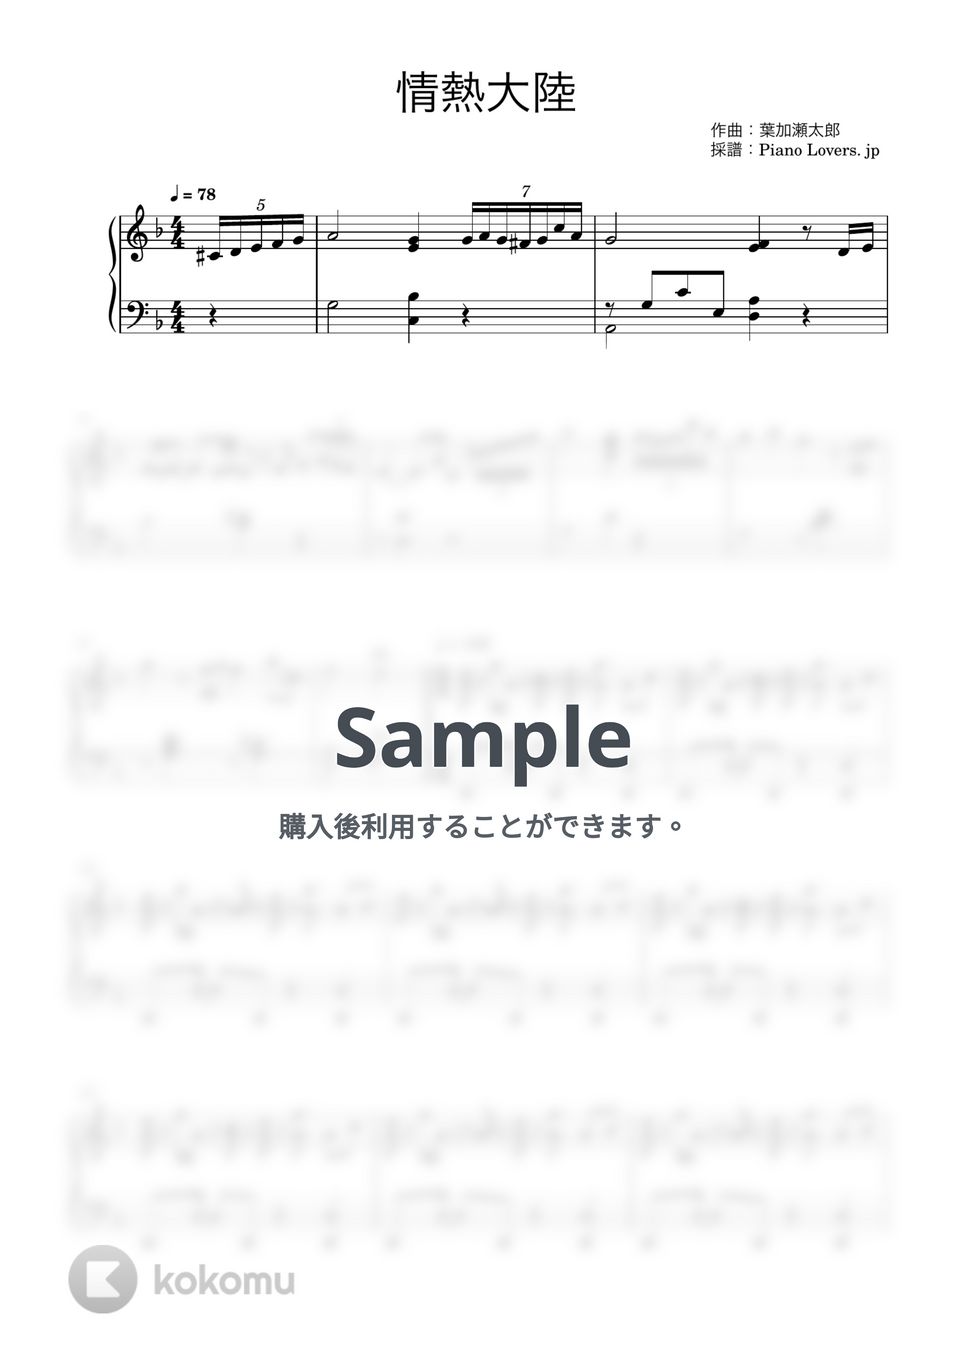 葉加瀬太郎 - 情熱大陸 (ピアノ楽譜 / 中級) by Piano Lovers. jp